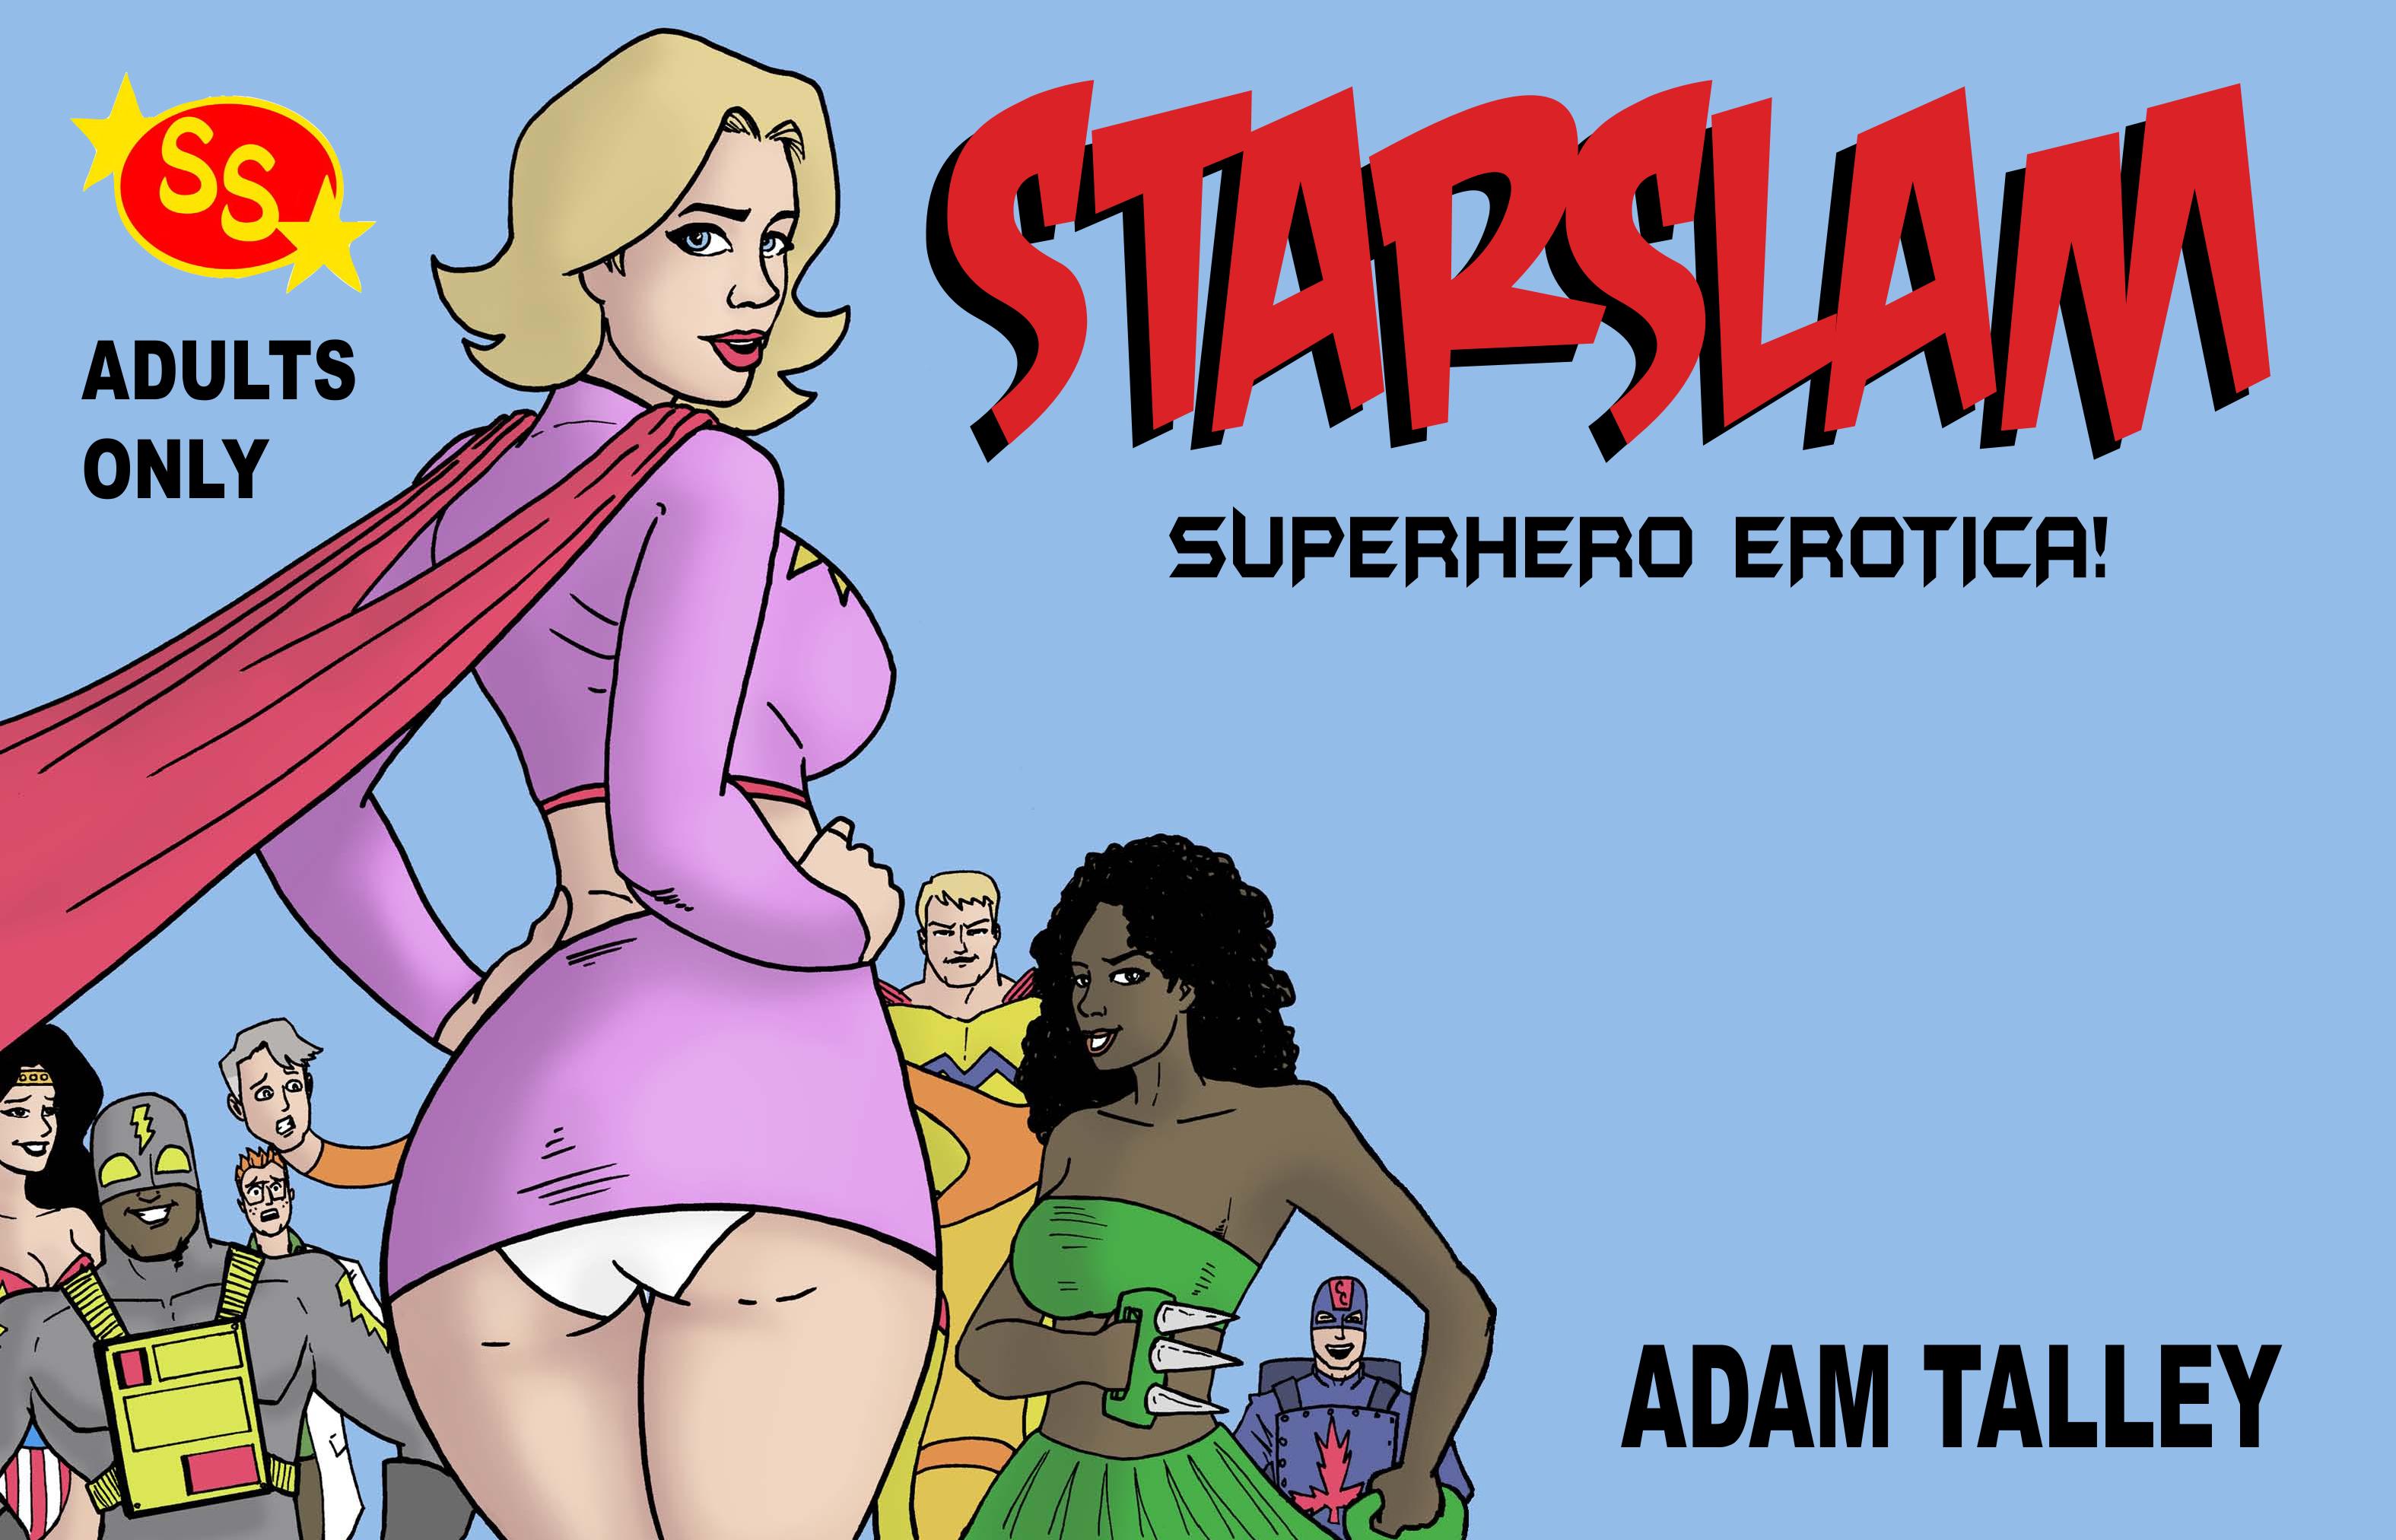 Adam Talley - Starslam Superhero Erotica! 1